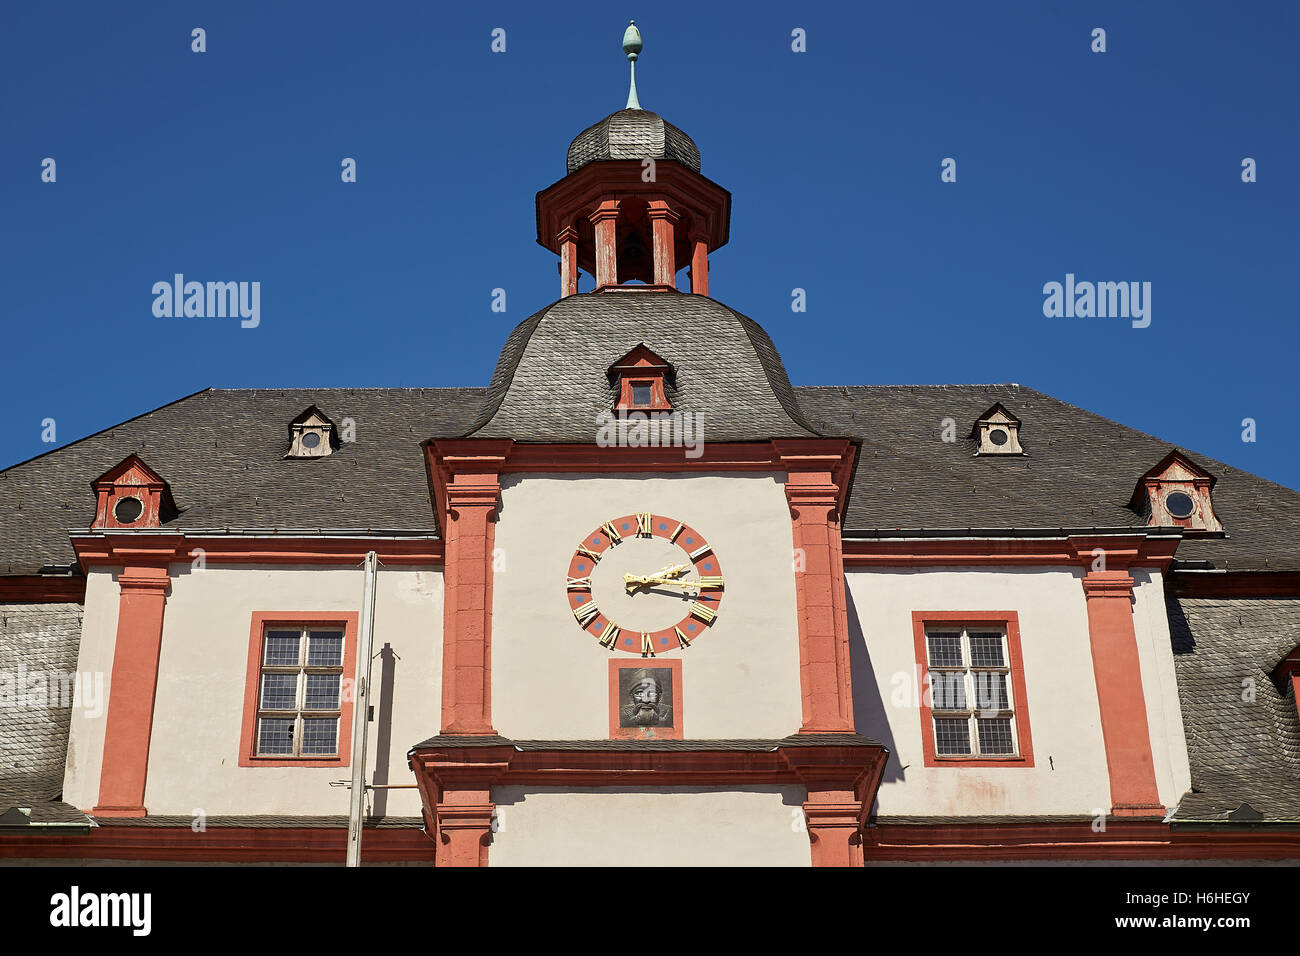 Altes Kaufhaus, Old Department Store with Augenroller figure, Florinsmarkt, Altstadt, Koblenz, Rhineland-Palatinate, Germany Stock Photo